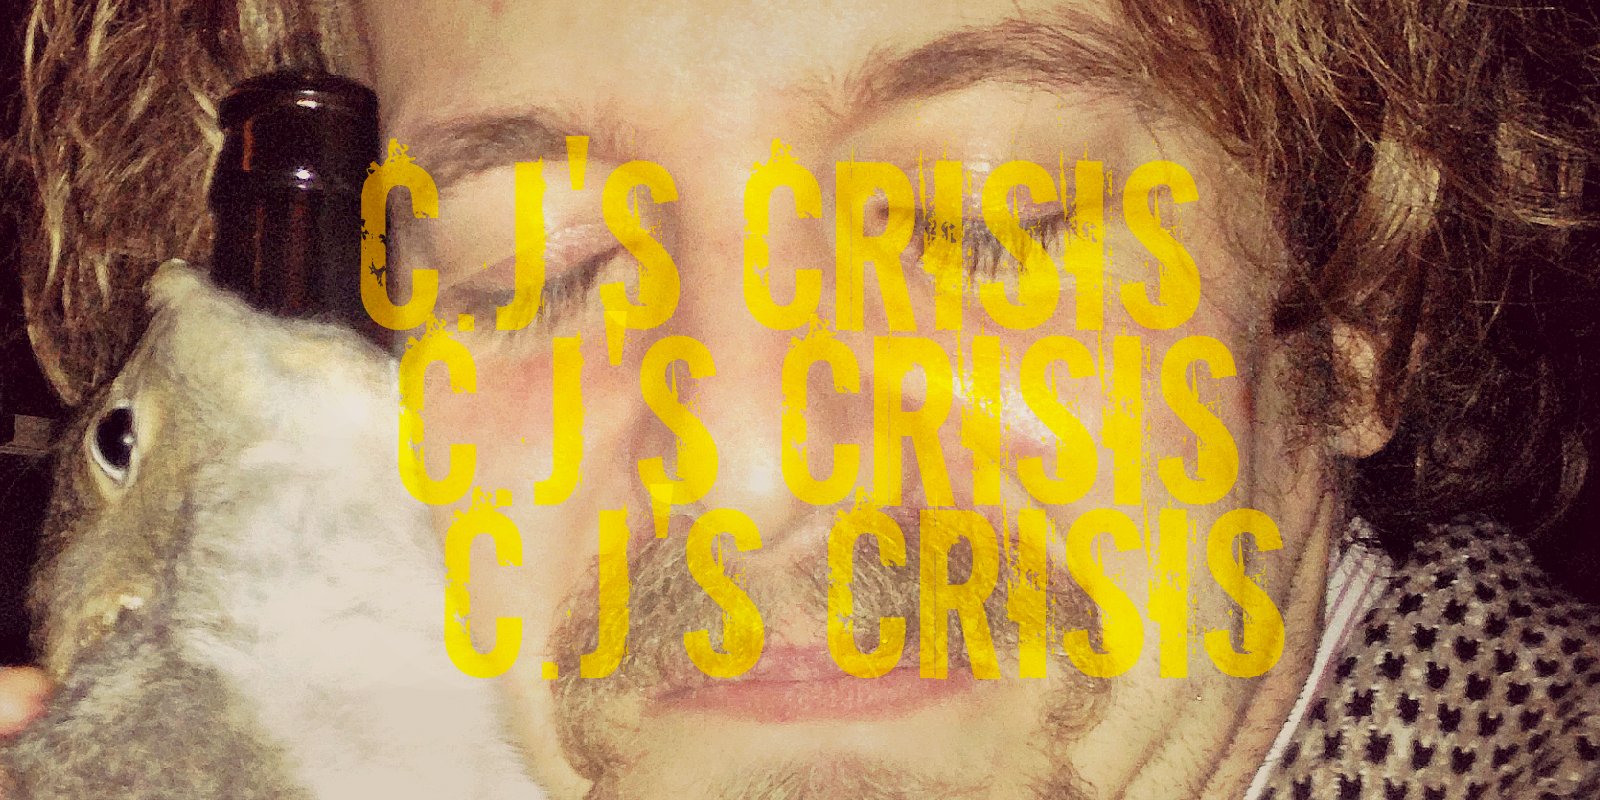 CJ's Crisis